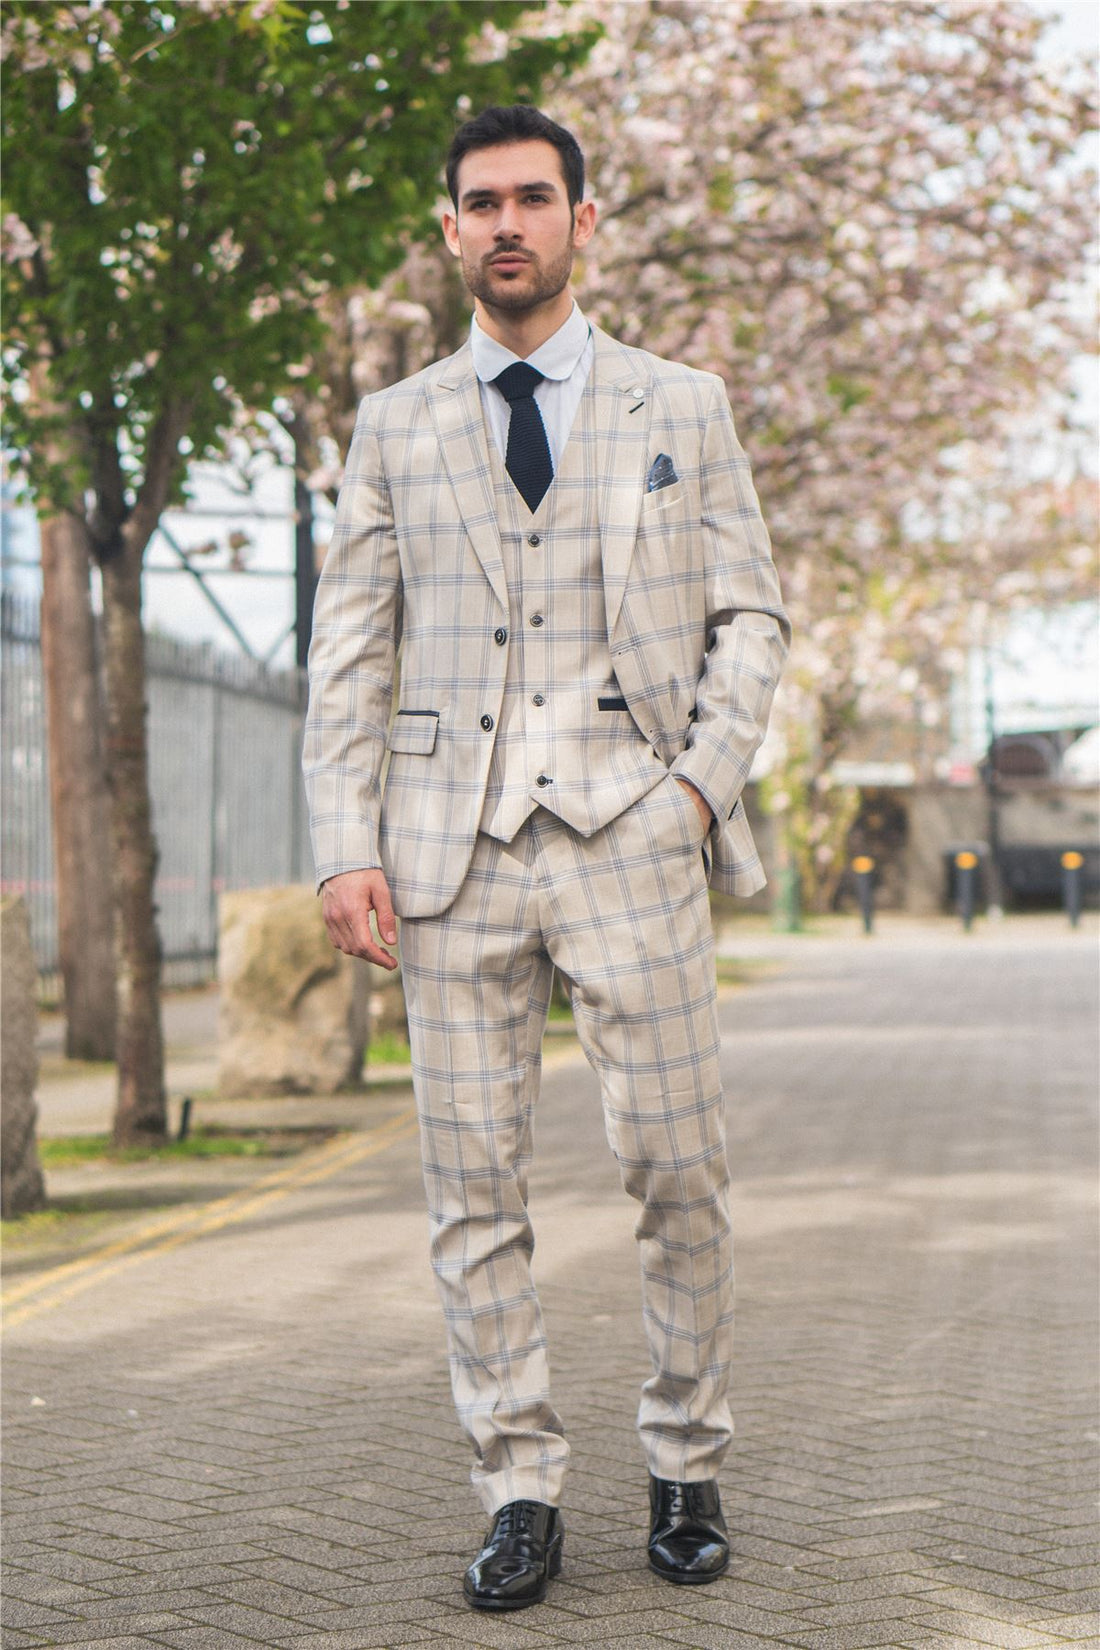 Men's Suit 3 Piece Beige Checked Classic Plaid Tailored Fit Formal Dress